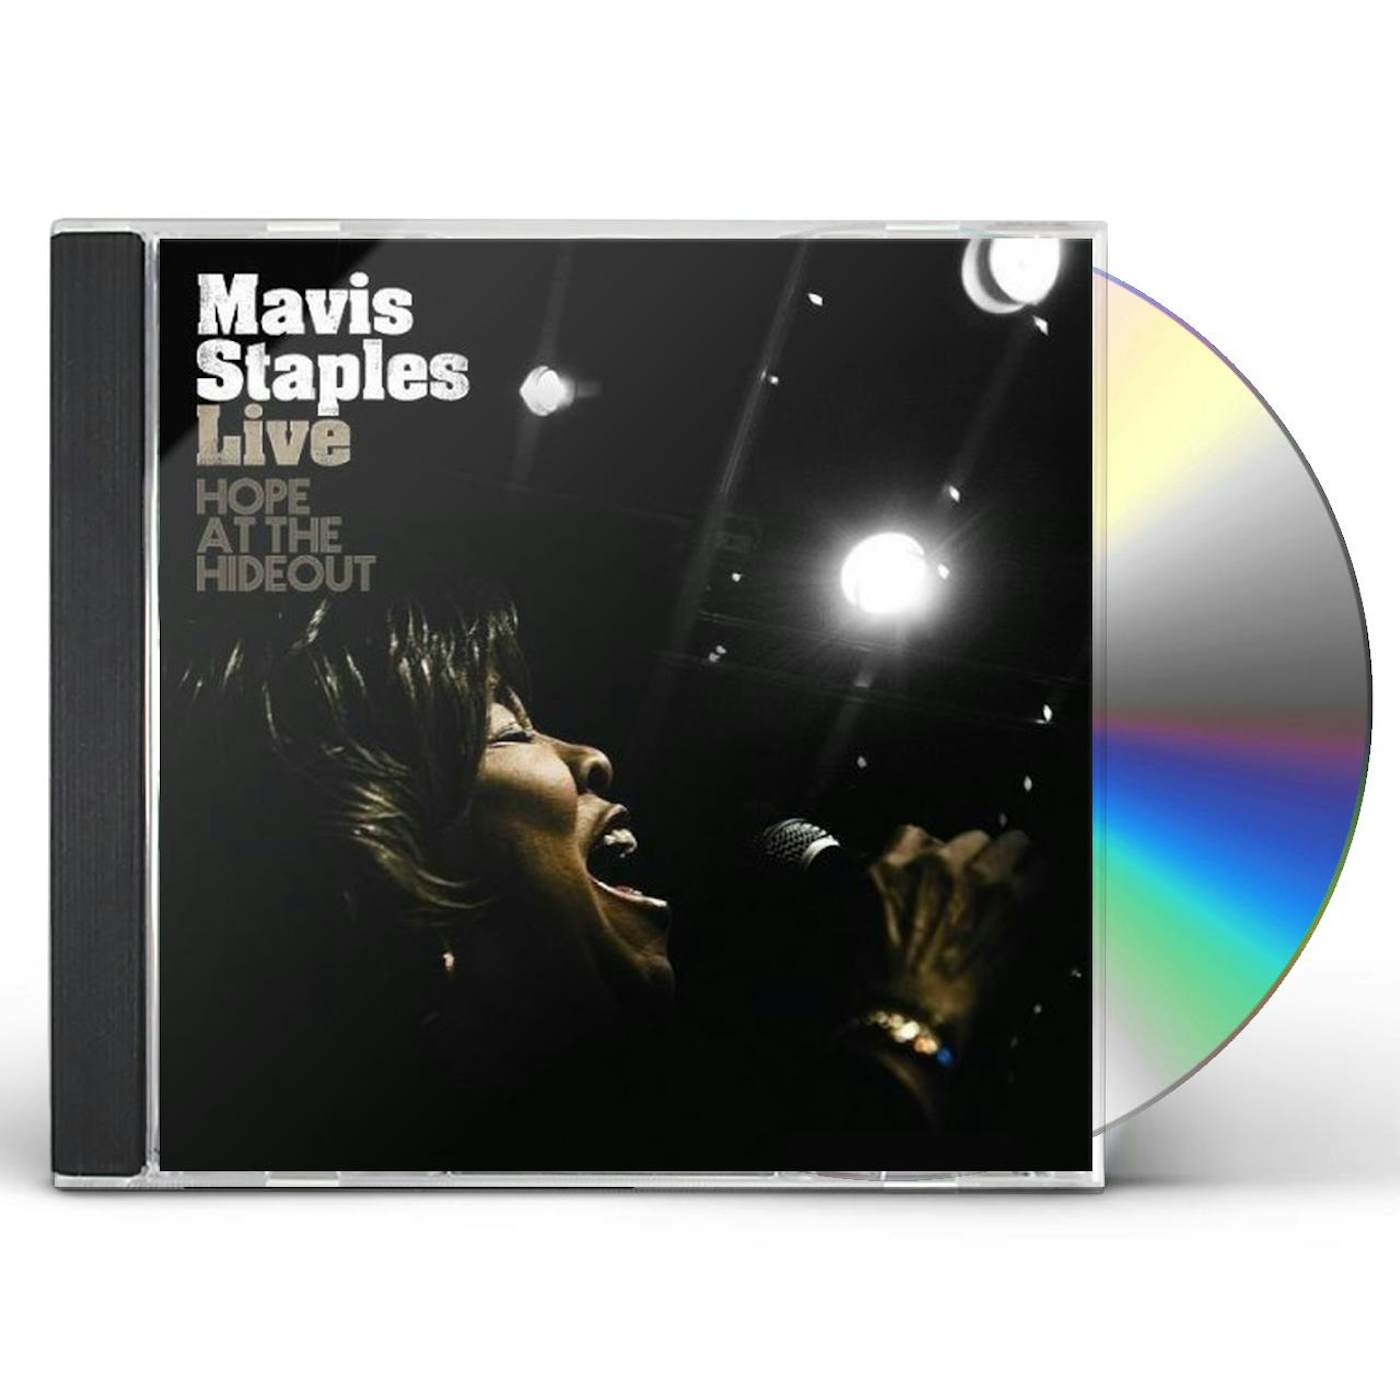 Mavis Staples LIVE HOPE AT THE HIDEOUT CD